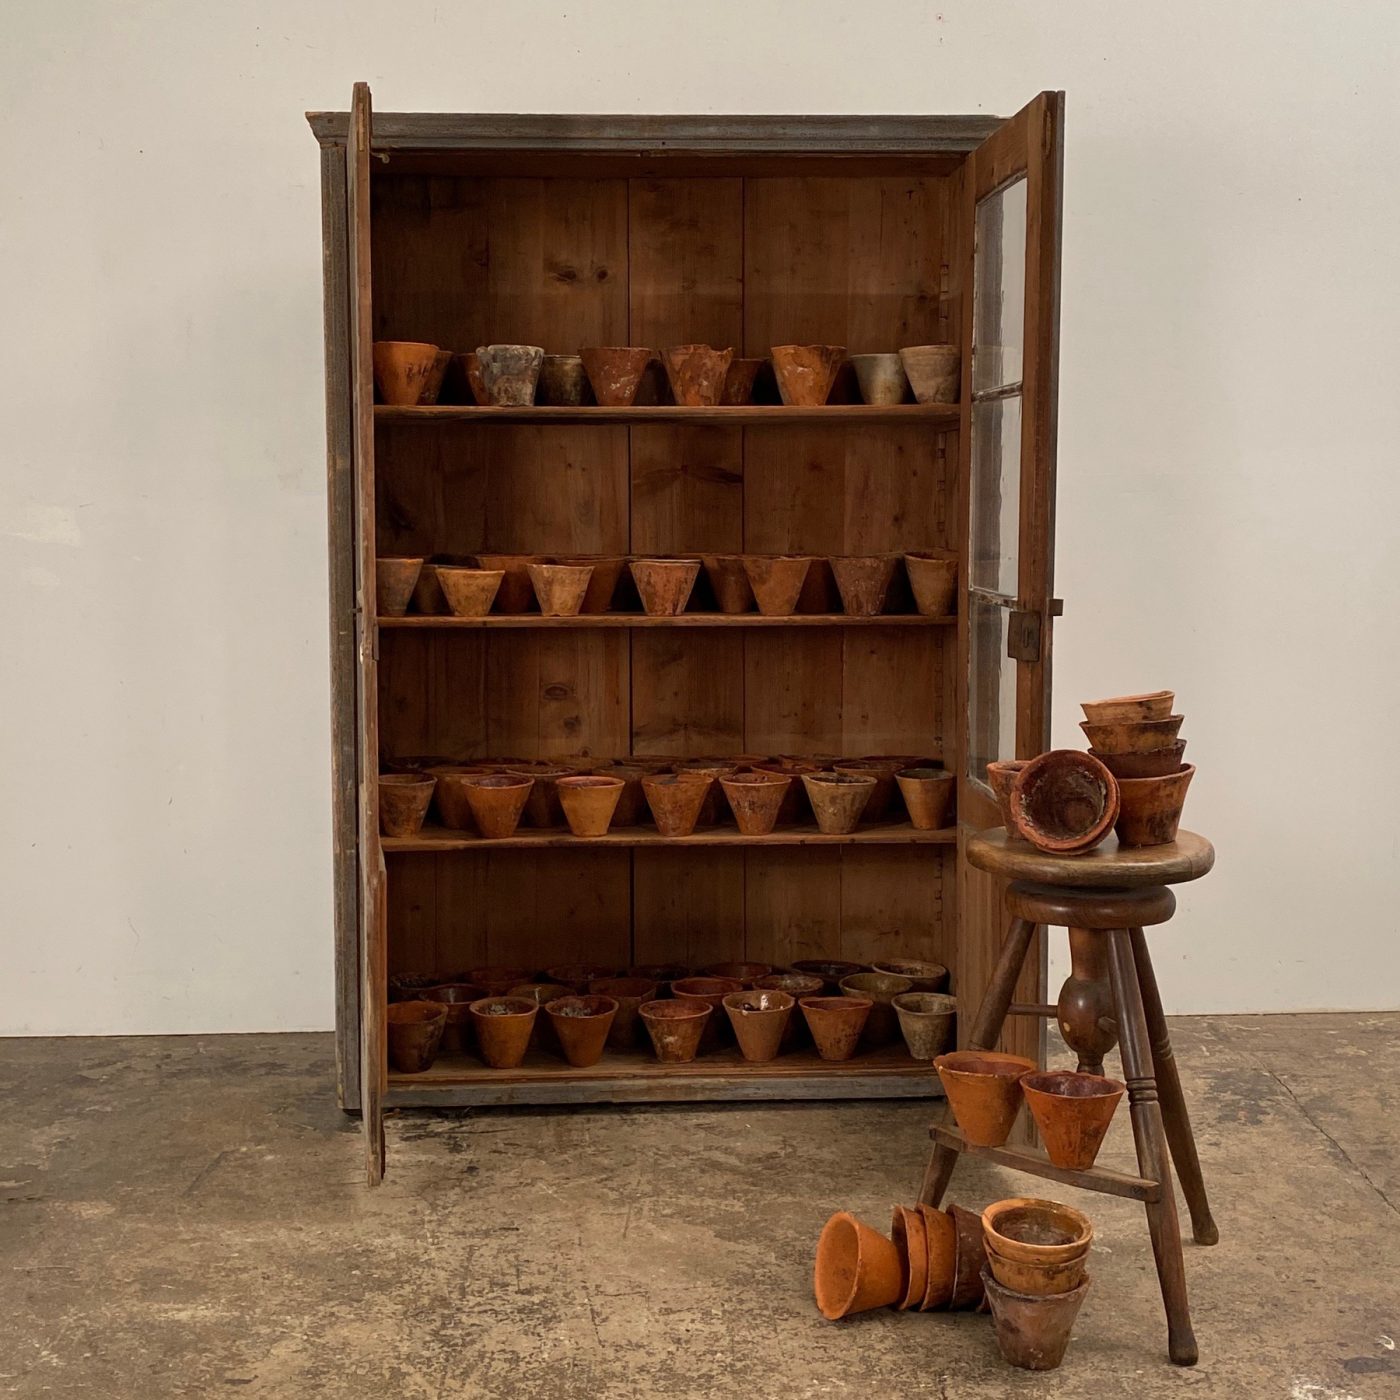 terracotta-pots-collection0006